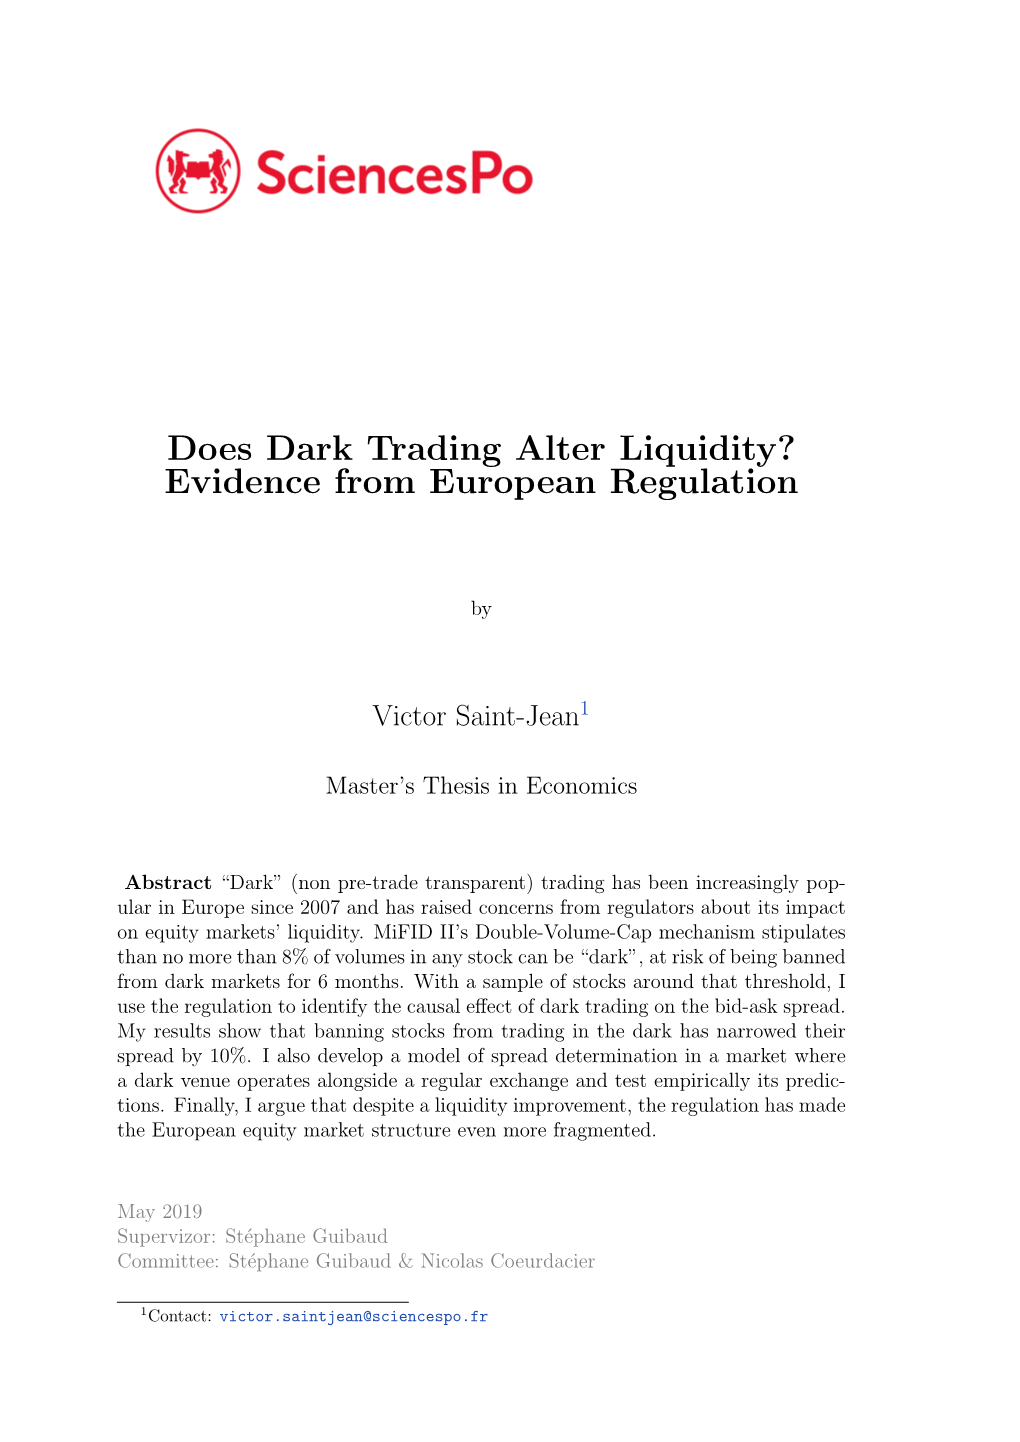 Does Dark Trading Alter Liquidity? Evidence from European Regulation